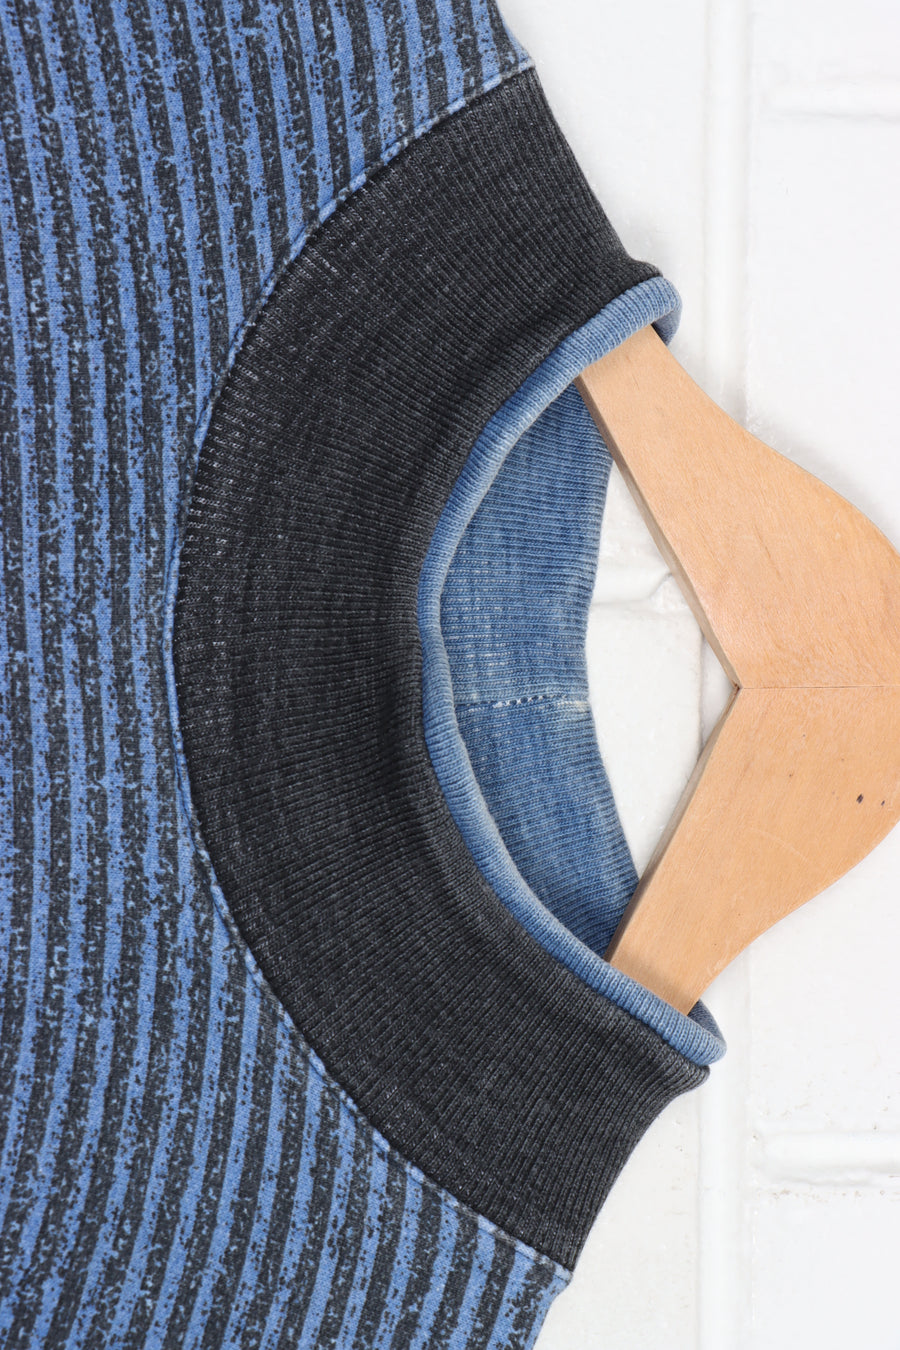 QUIKSILVER Blue & Black Striped Double Neck Surf Sport Sweatshirt (XL-XXL)